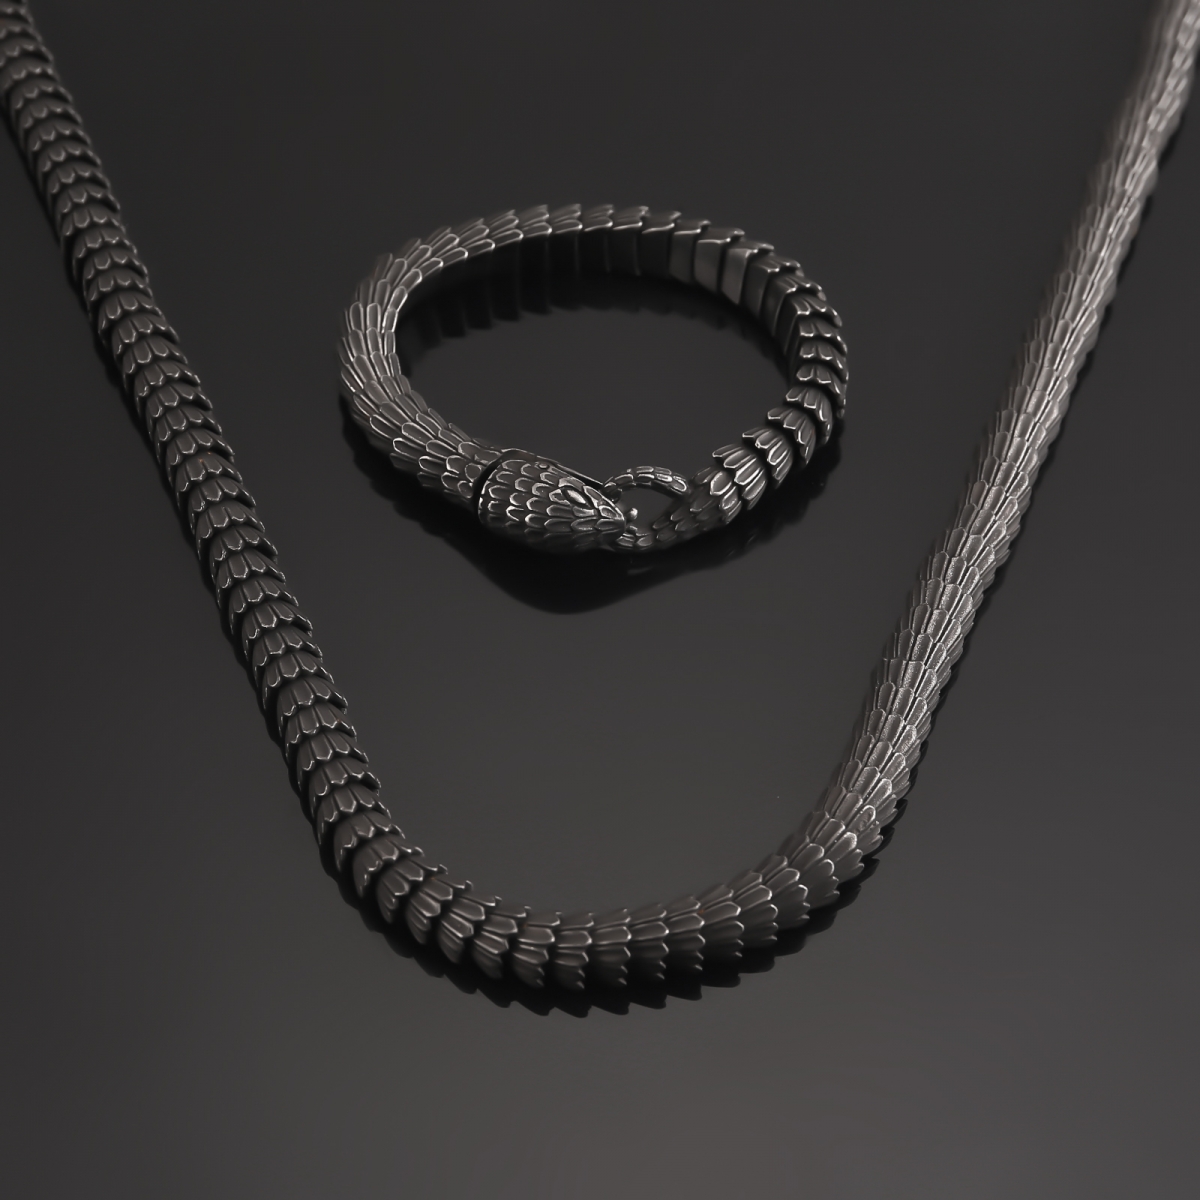 World Serpent Jormungandr Snake Necklace US$25/PC-NORSECOLLECTION- Viking Jewelry,Viking Necklace,Viking Bracelet,Viking Rings,Viking Mugs,Viking Accessories,Viking Crafts